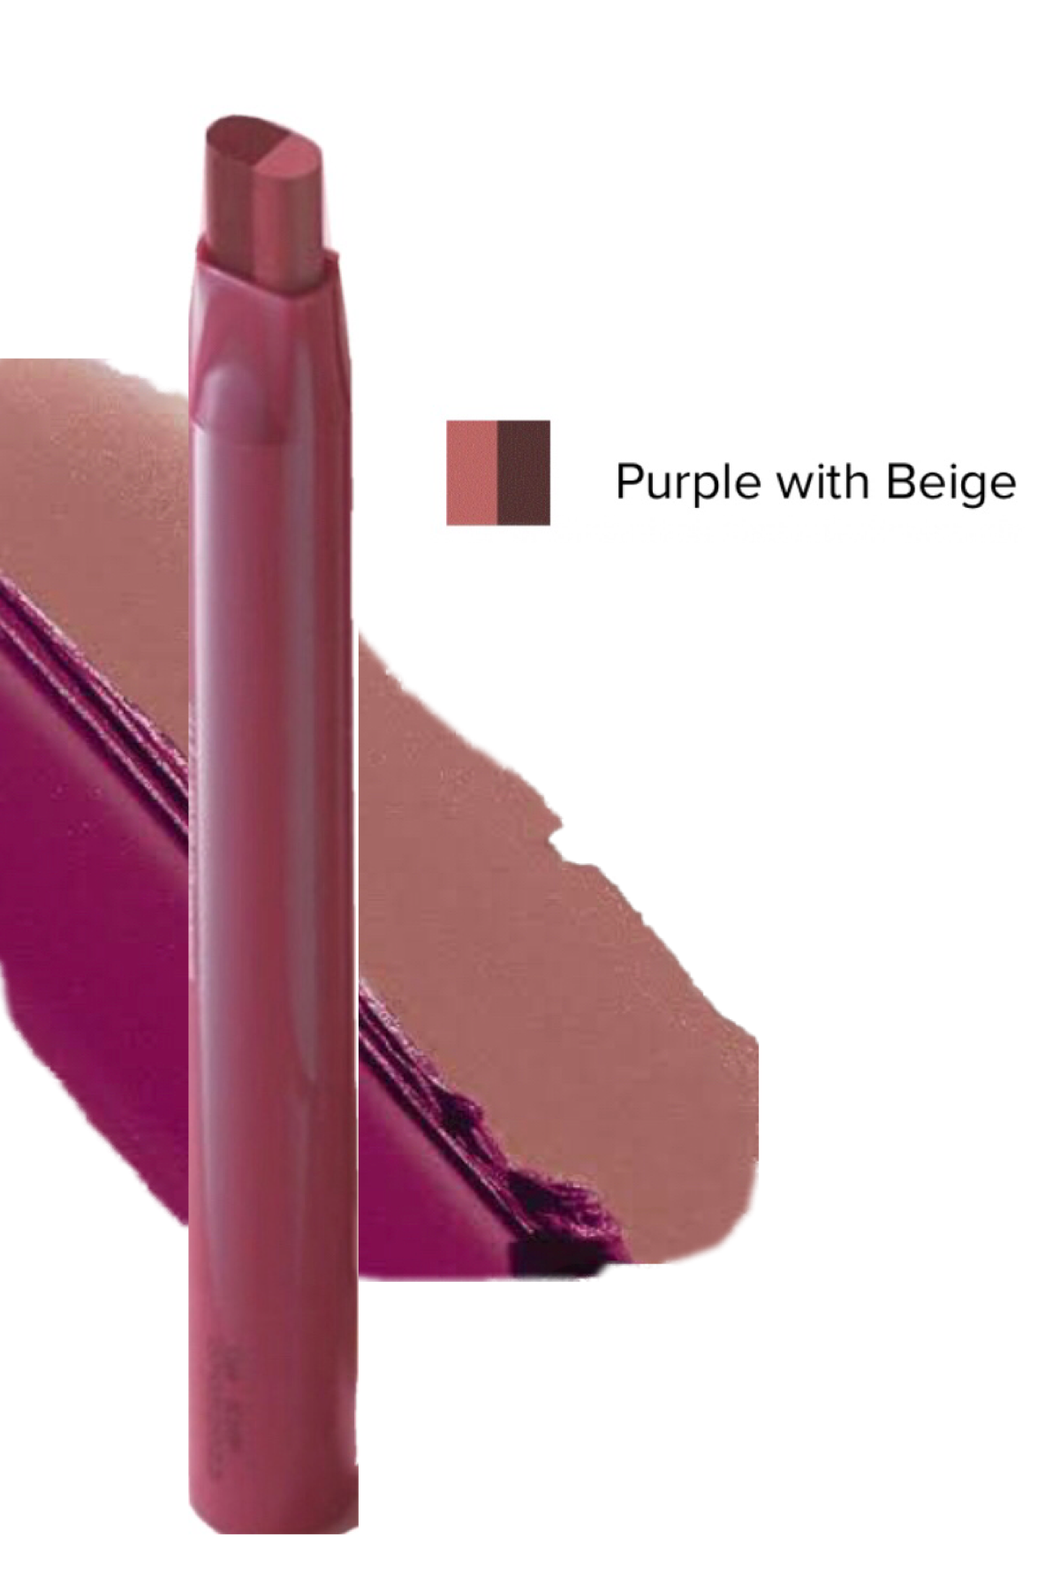 Avon Face Shop Flat Two-Tone Lipstick Purple with Beige